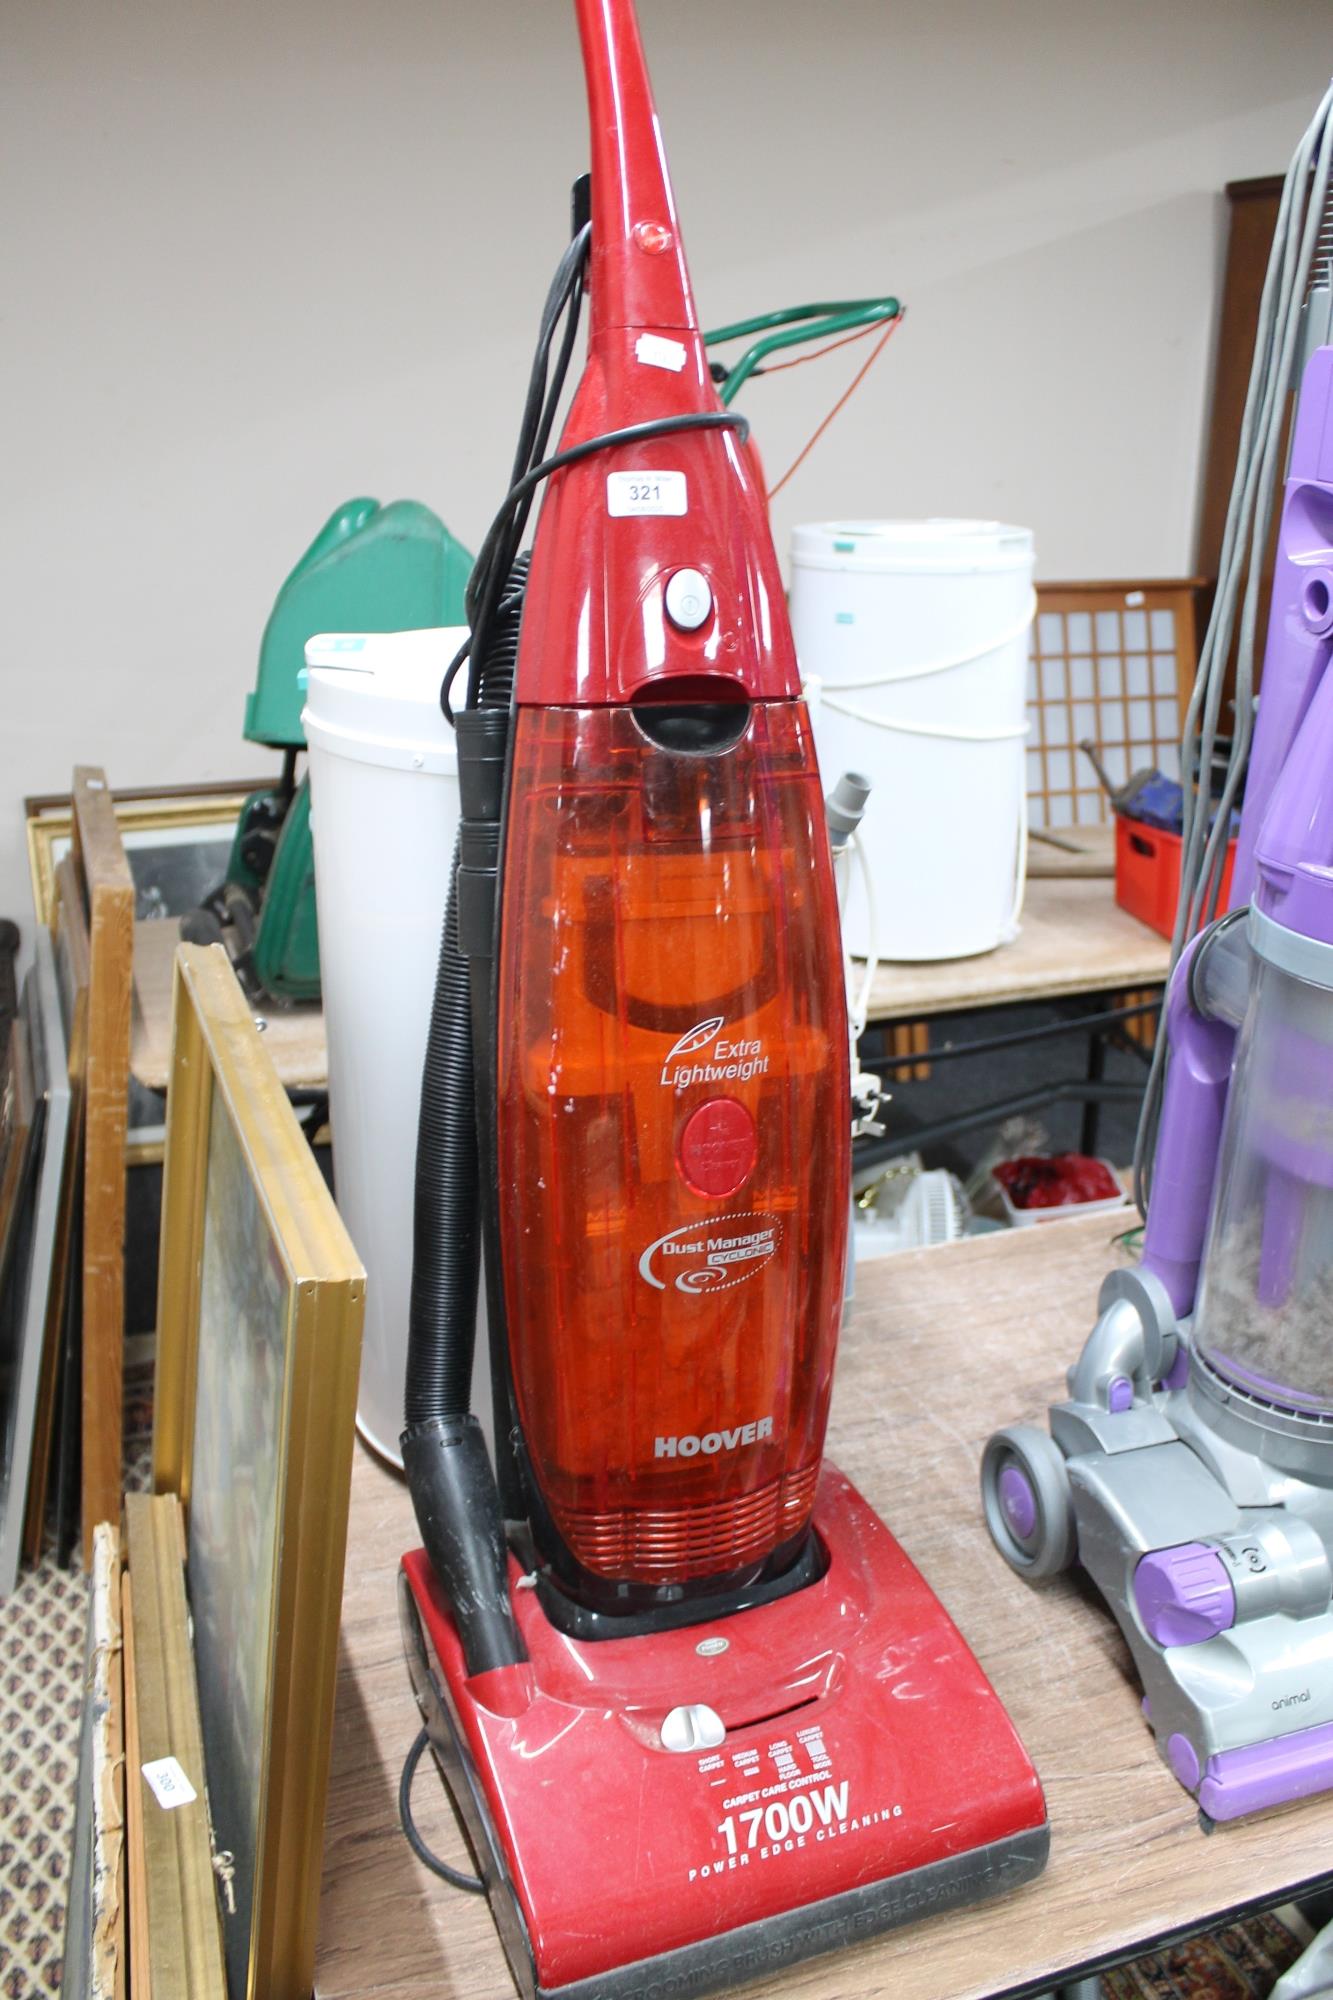 A Hoover vacuum